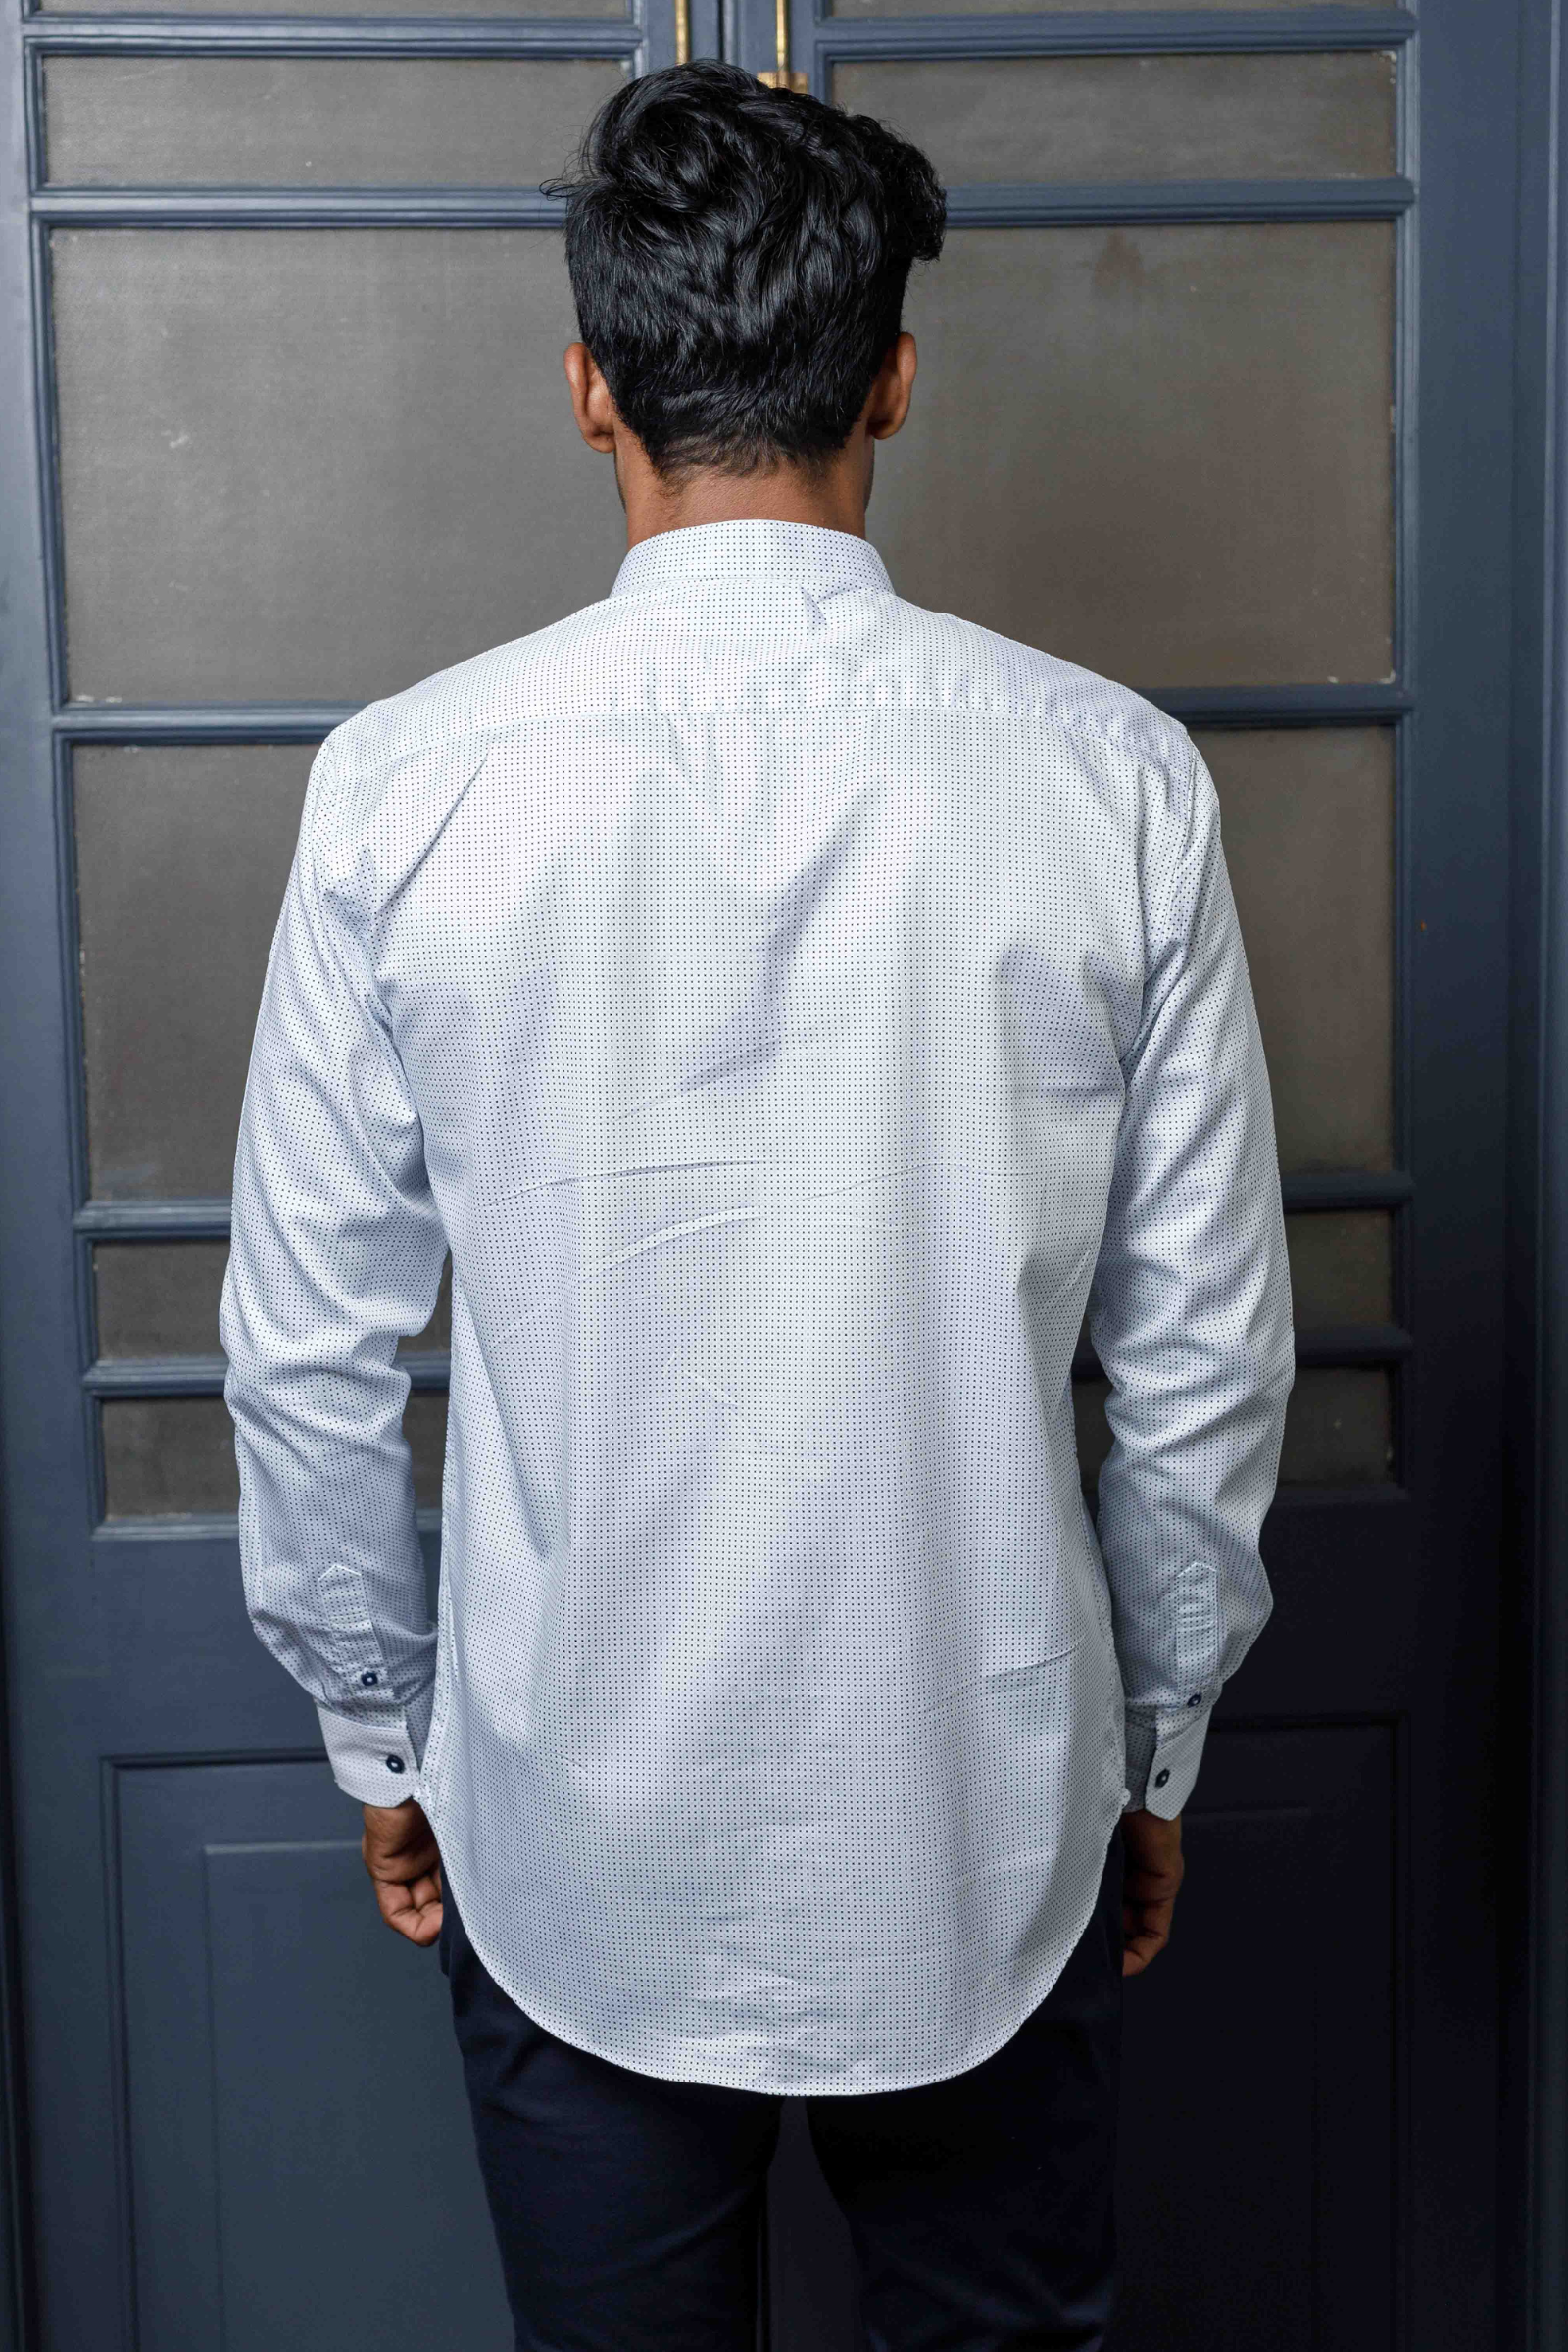 Seamless Print Nehru Shirt with Inner Collar Contrast